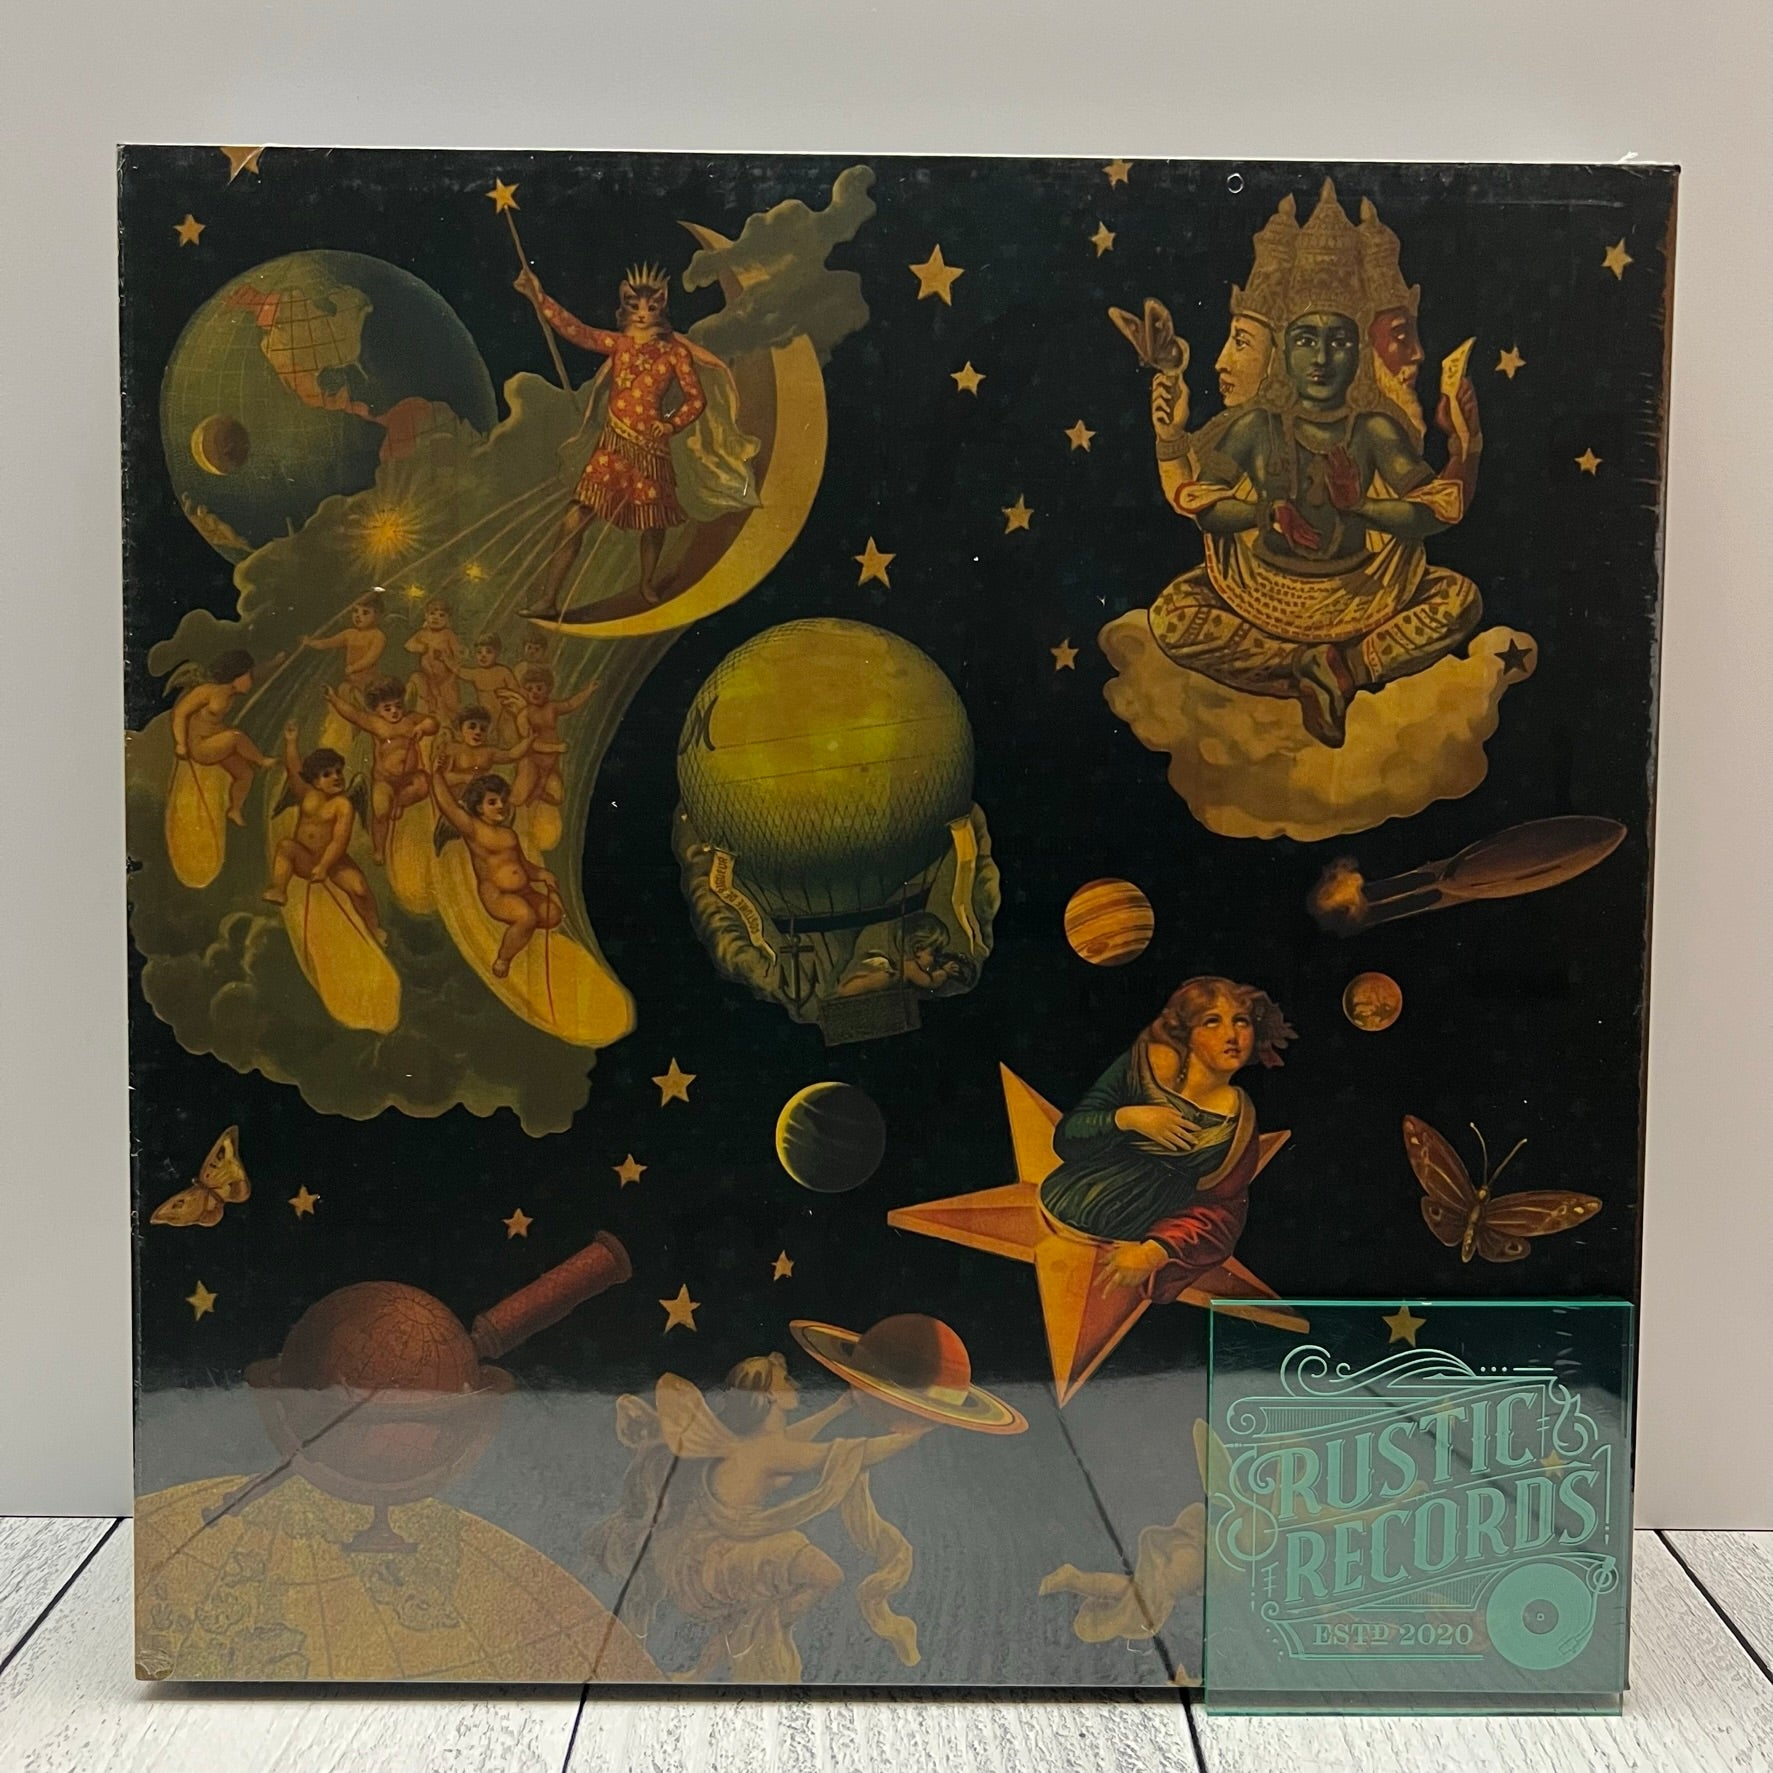 Smashing Pumpkins - Mellon Collie And The Infinite Sadness (4LP Box Set) [Bump/Crease]